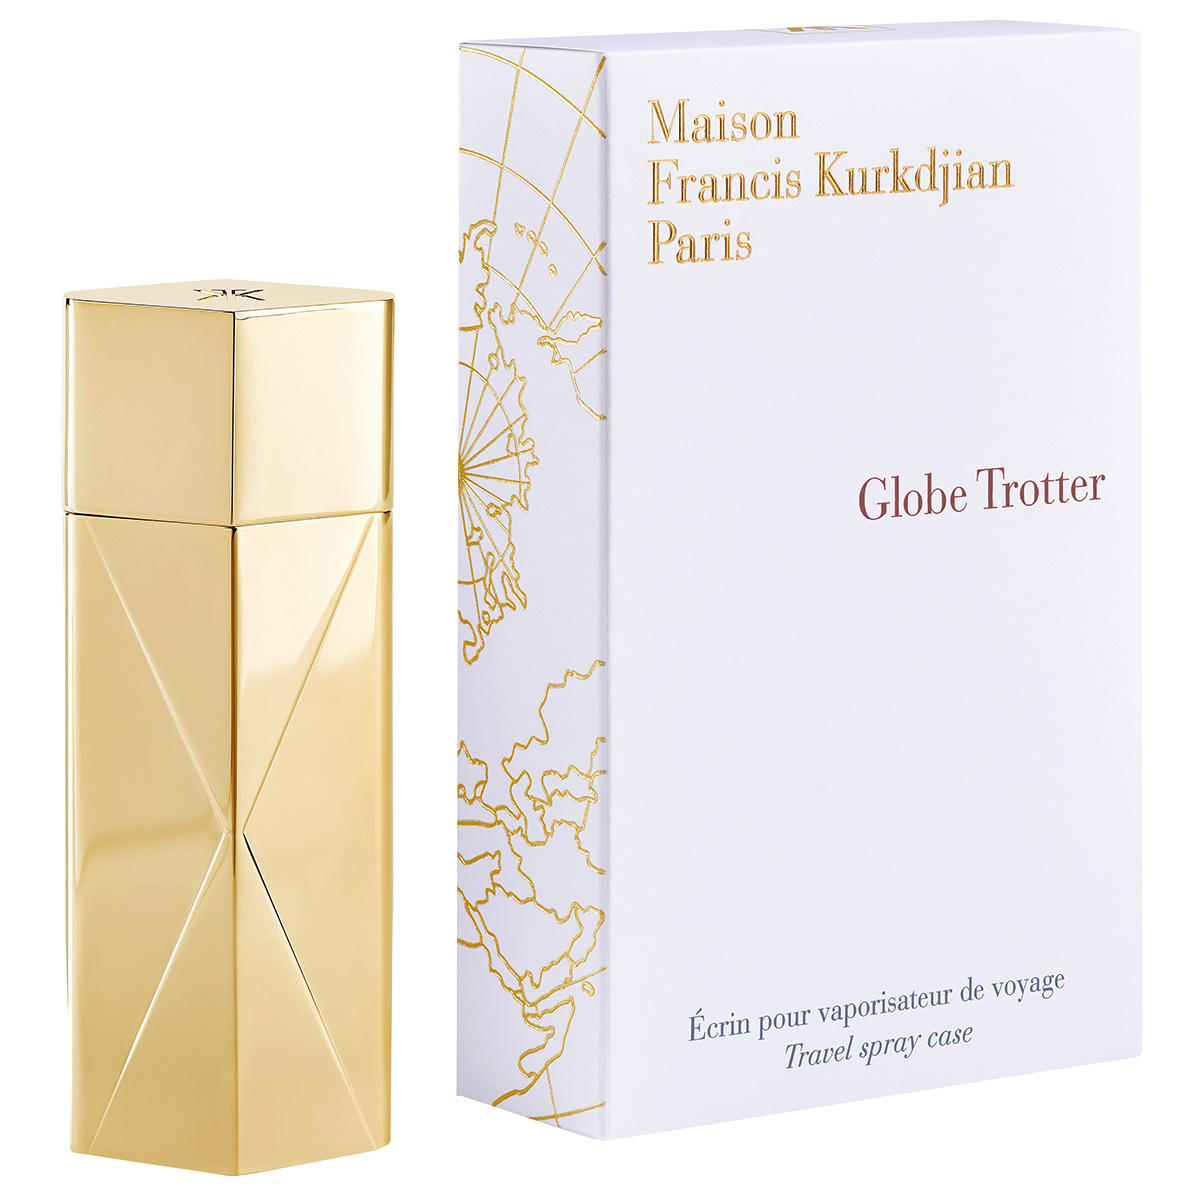 Maison Francis Kurkdjian Paris Globe Trotter Travel Case Gold Edition  - 2